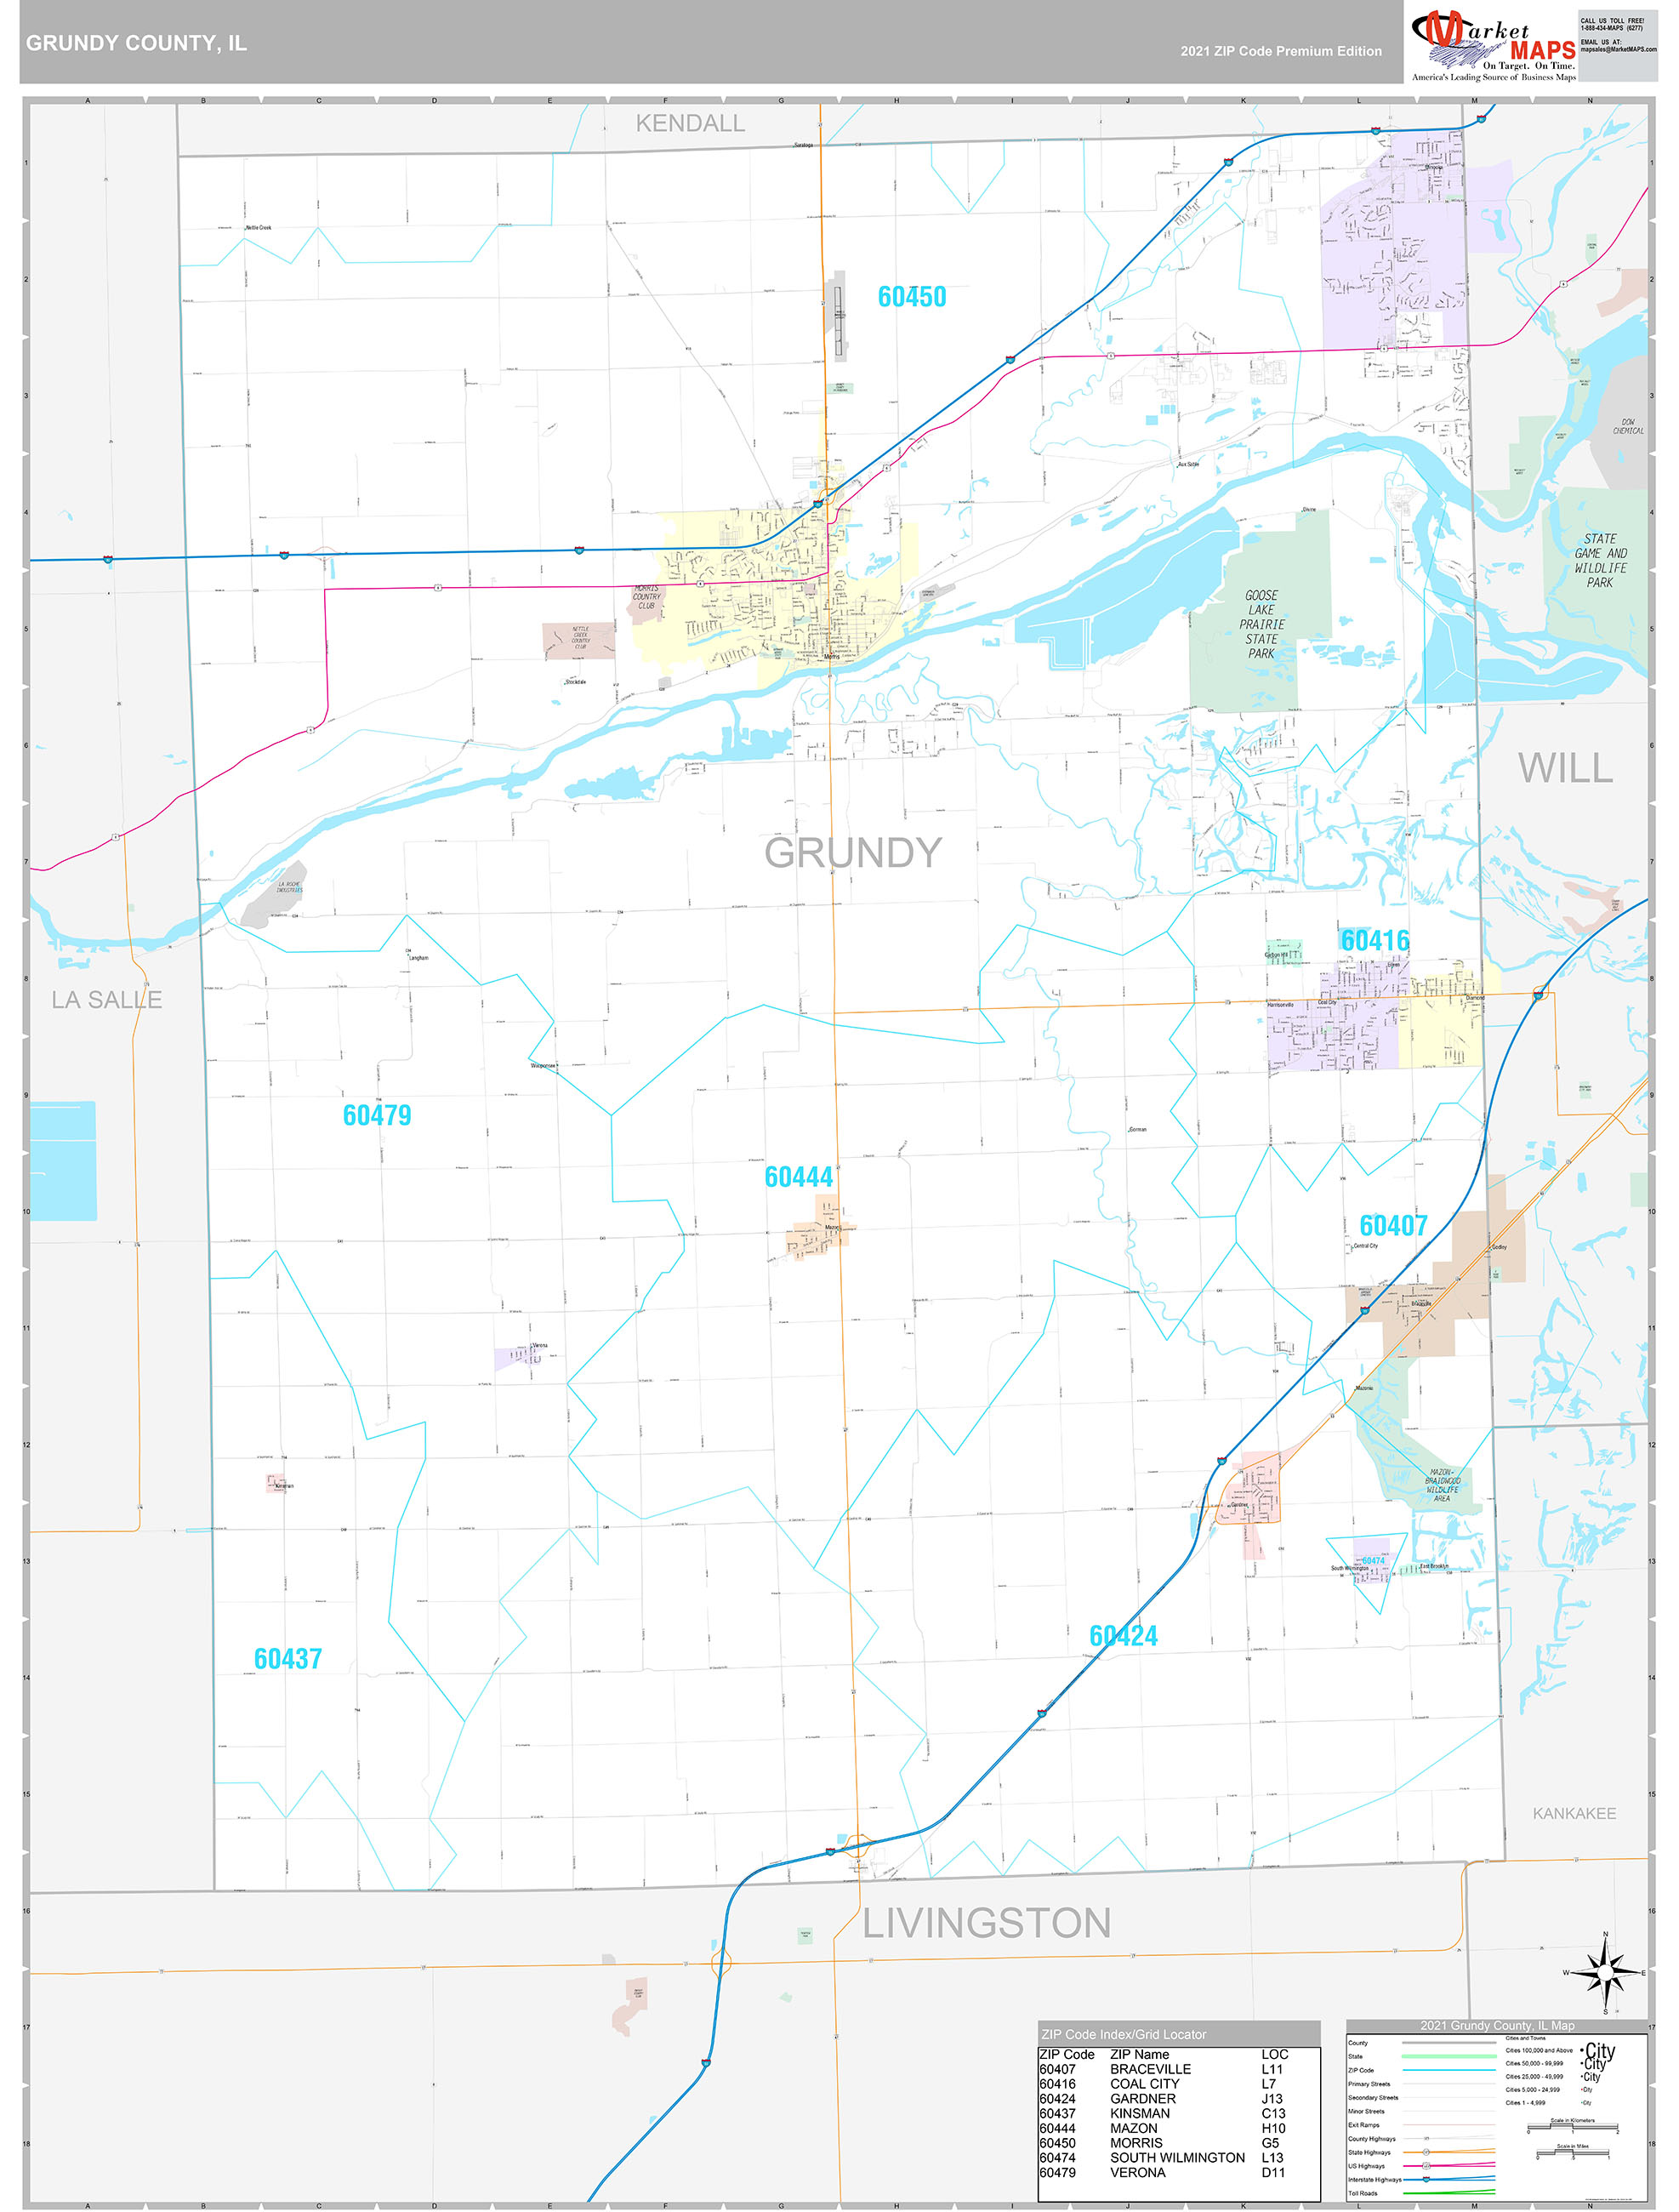 Grundy County IL Wall Map Premium Style by MarketMAPS